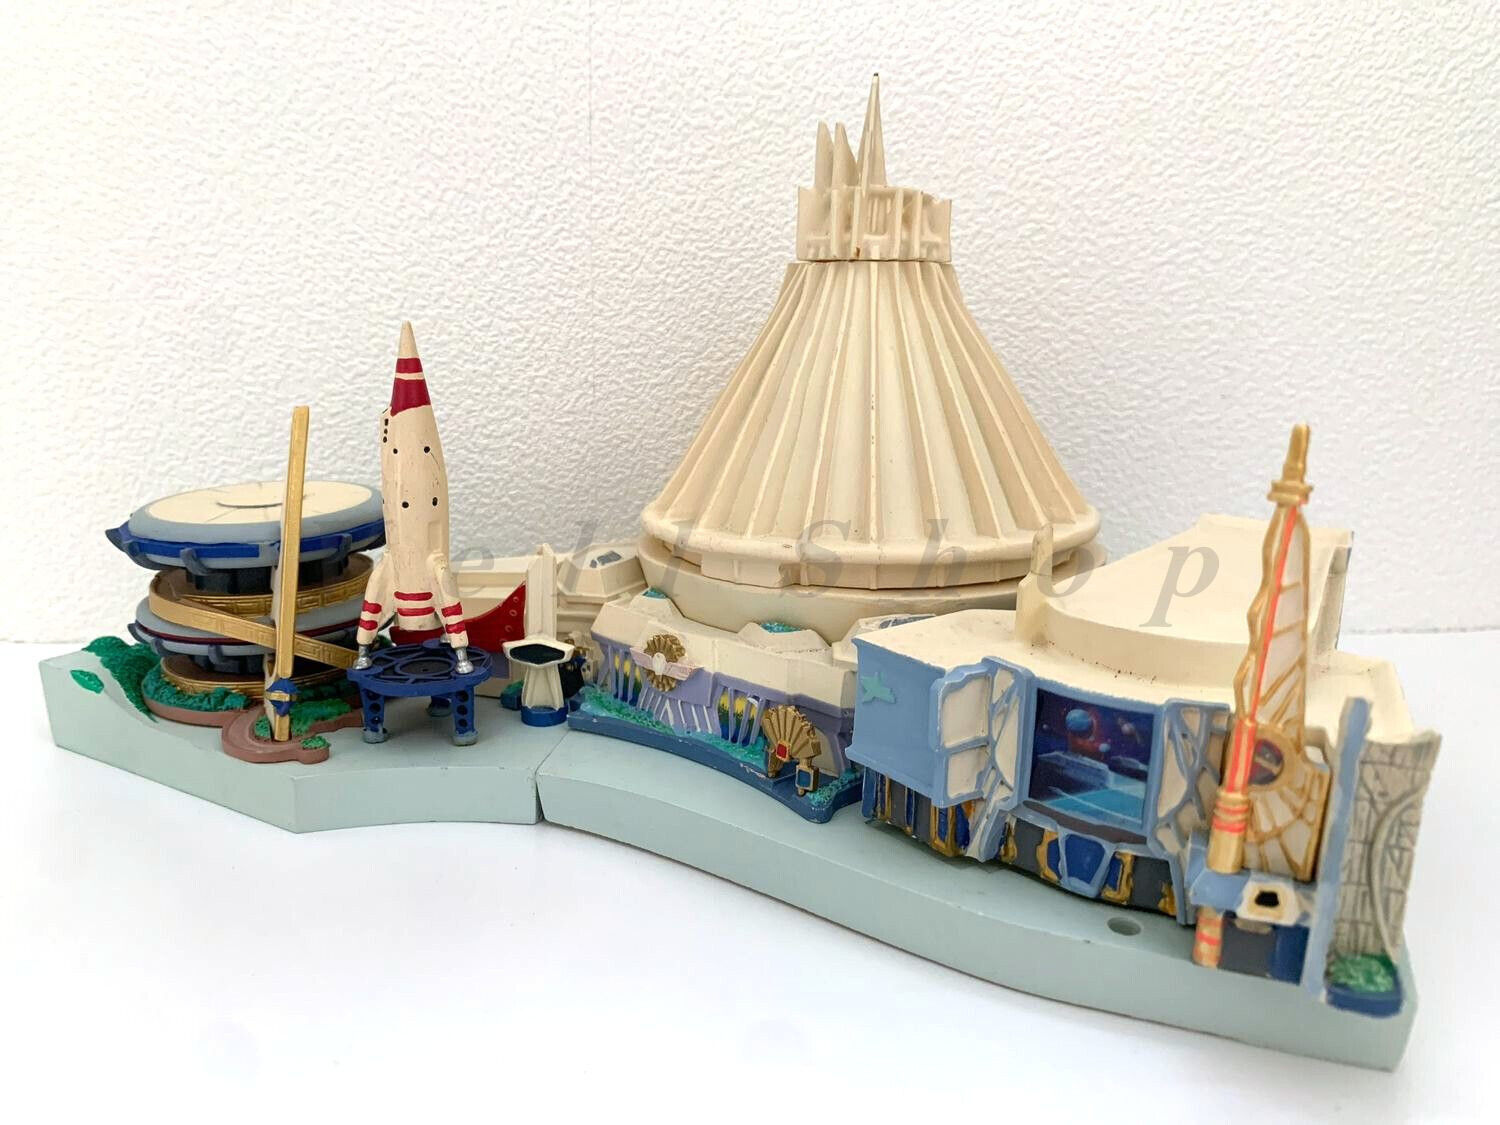 Disneyland California Tomorrowland SPACE MOUNTAIN Diorama Miniature Figurine 39